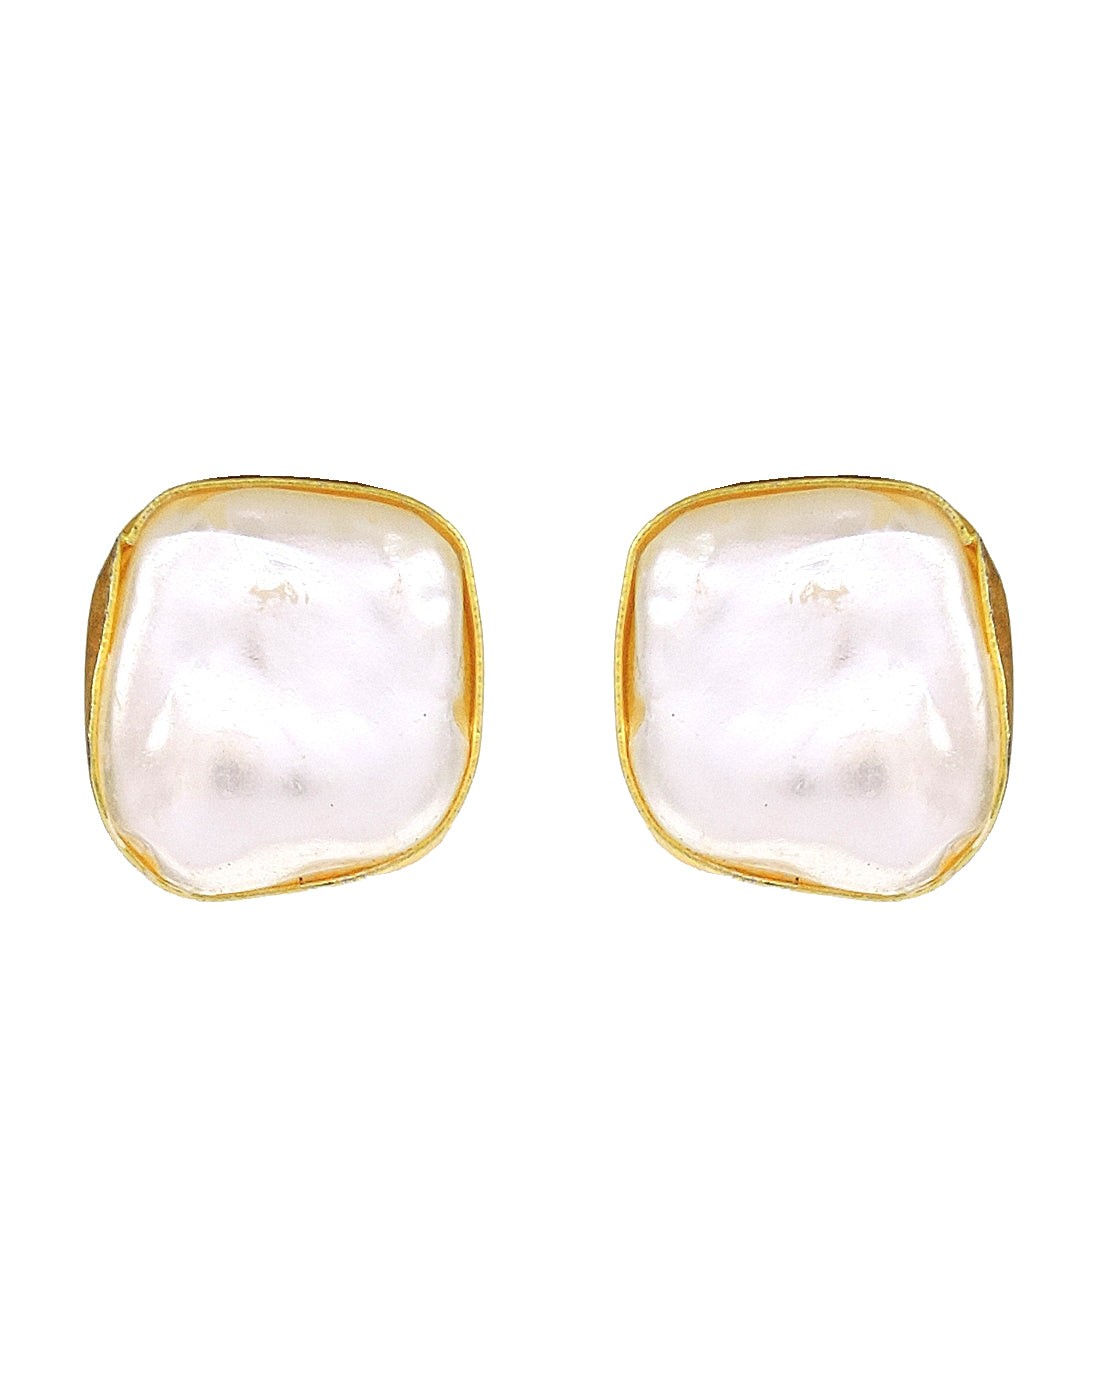 Pearl Cube Earrings - Statement Earrings - Gold-Plated & Hypoallergenic Jewellery - Made in India - Dubai Jewellery - Dori